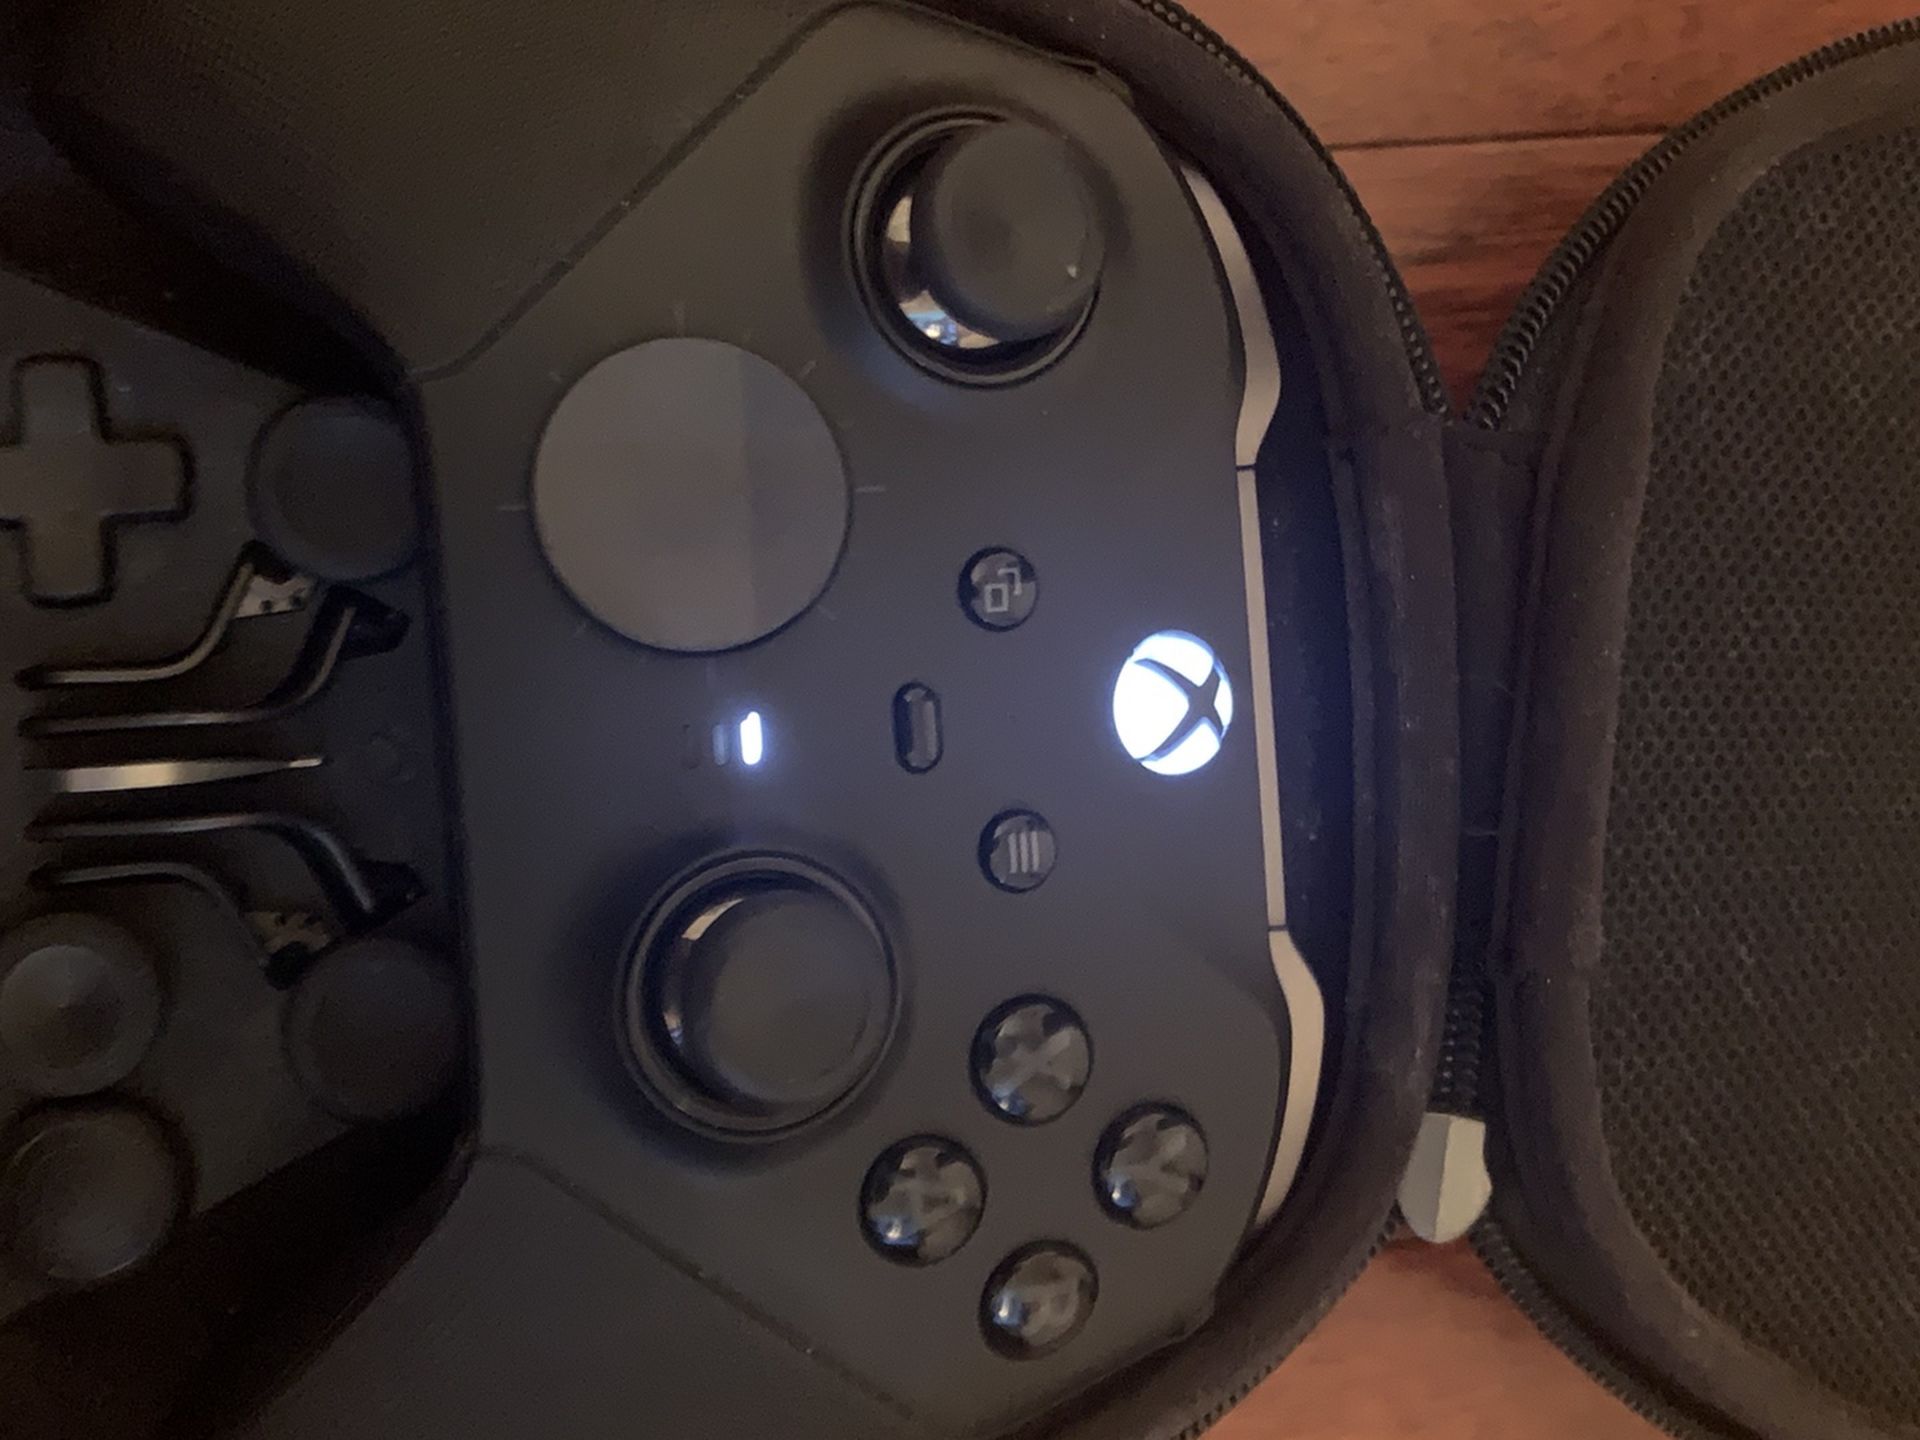 Xbox Elite Series 2 Controller